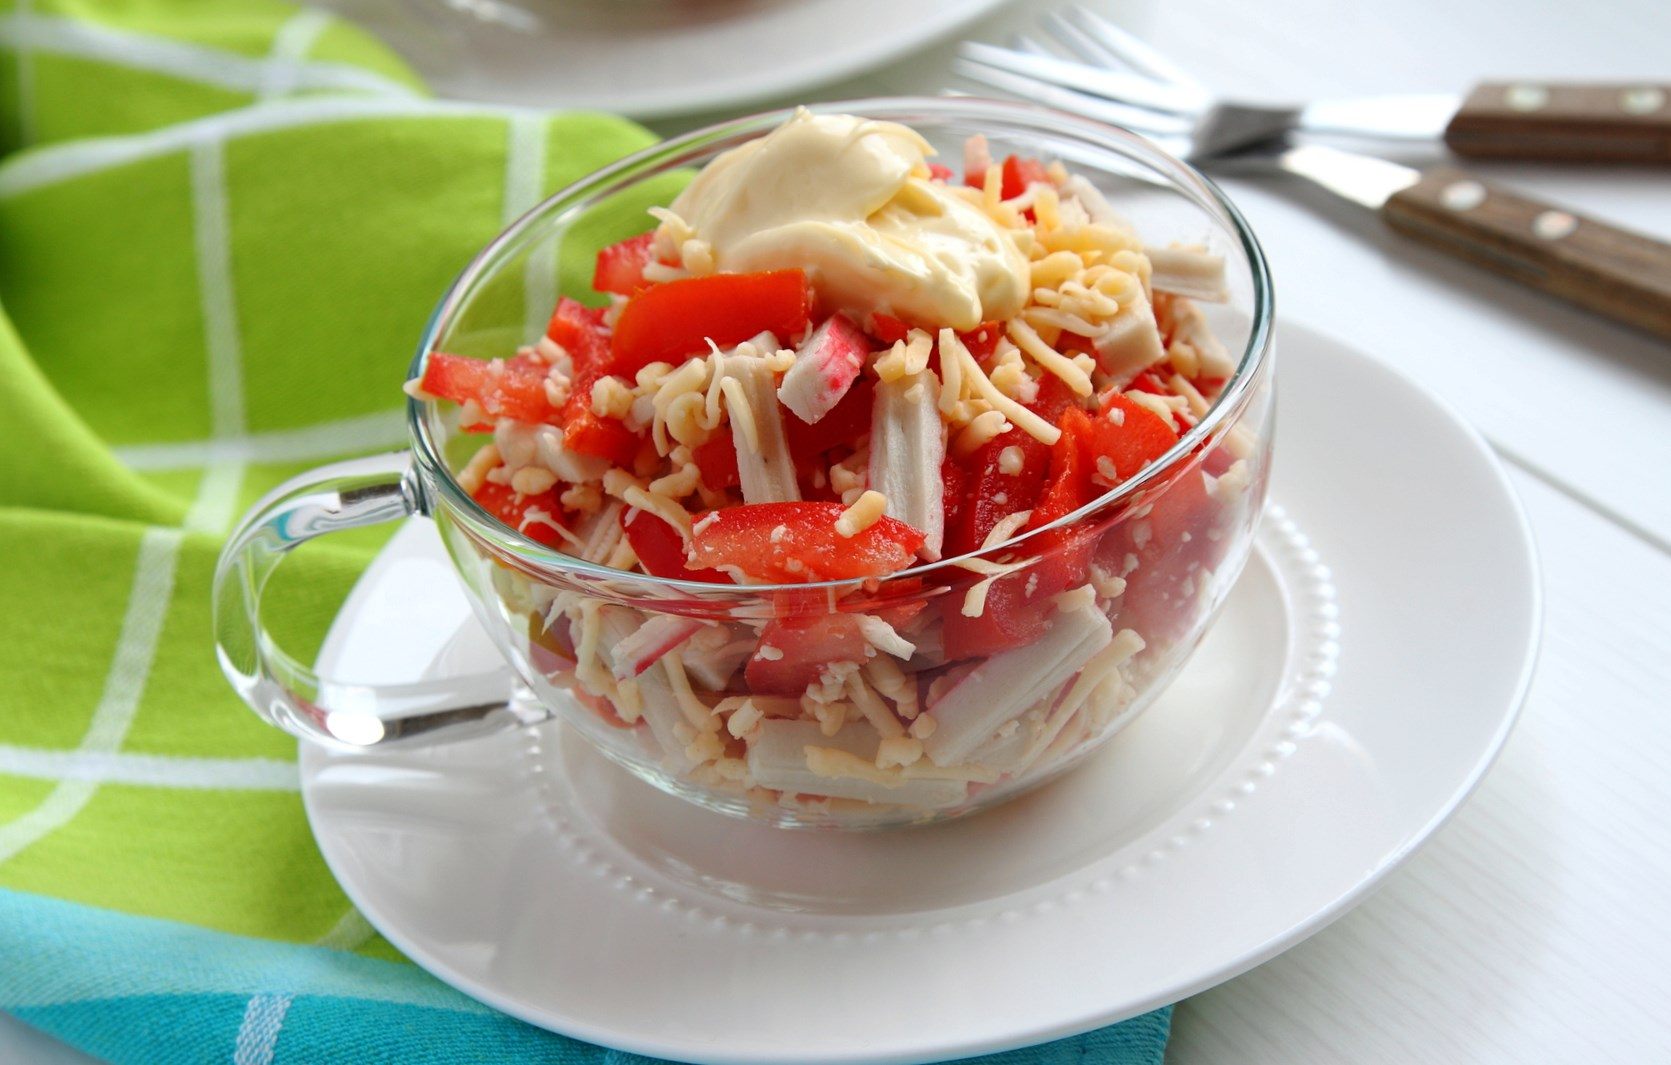 Фото рецепт салат с крабовыми палочками и помидорами и